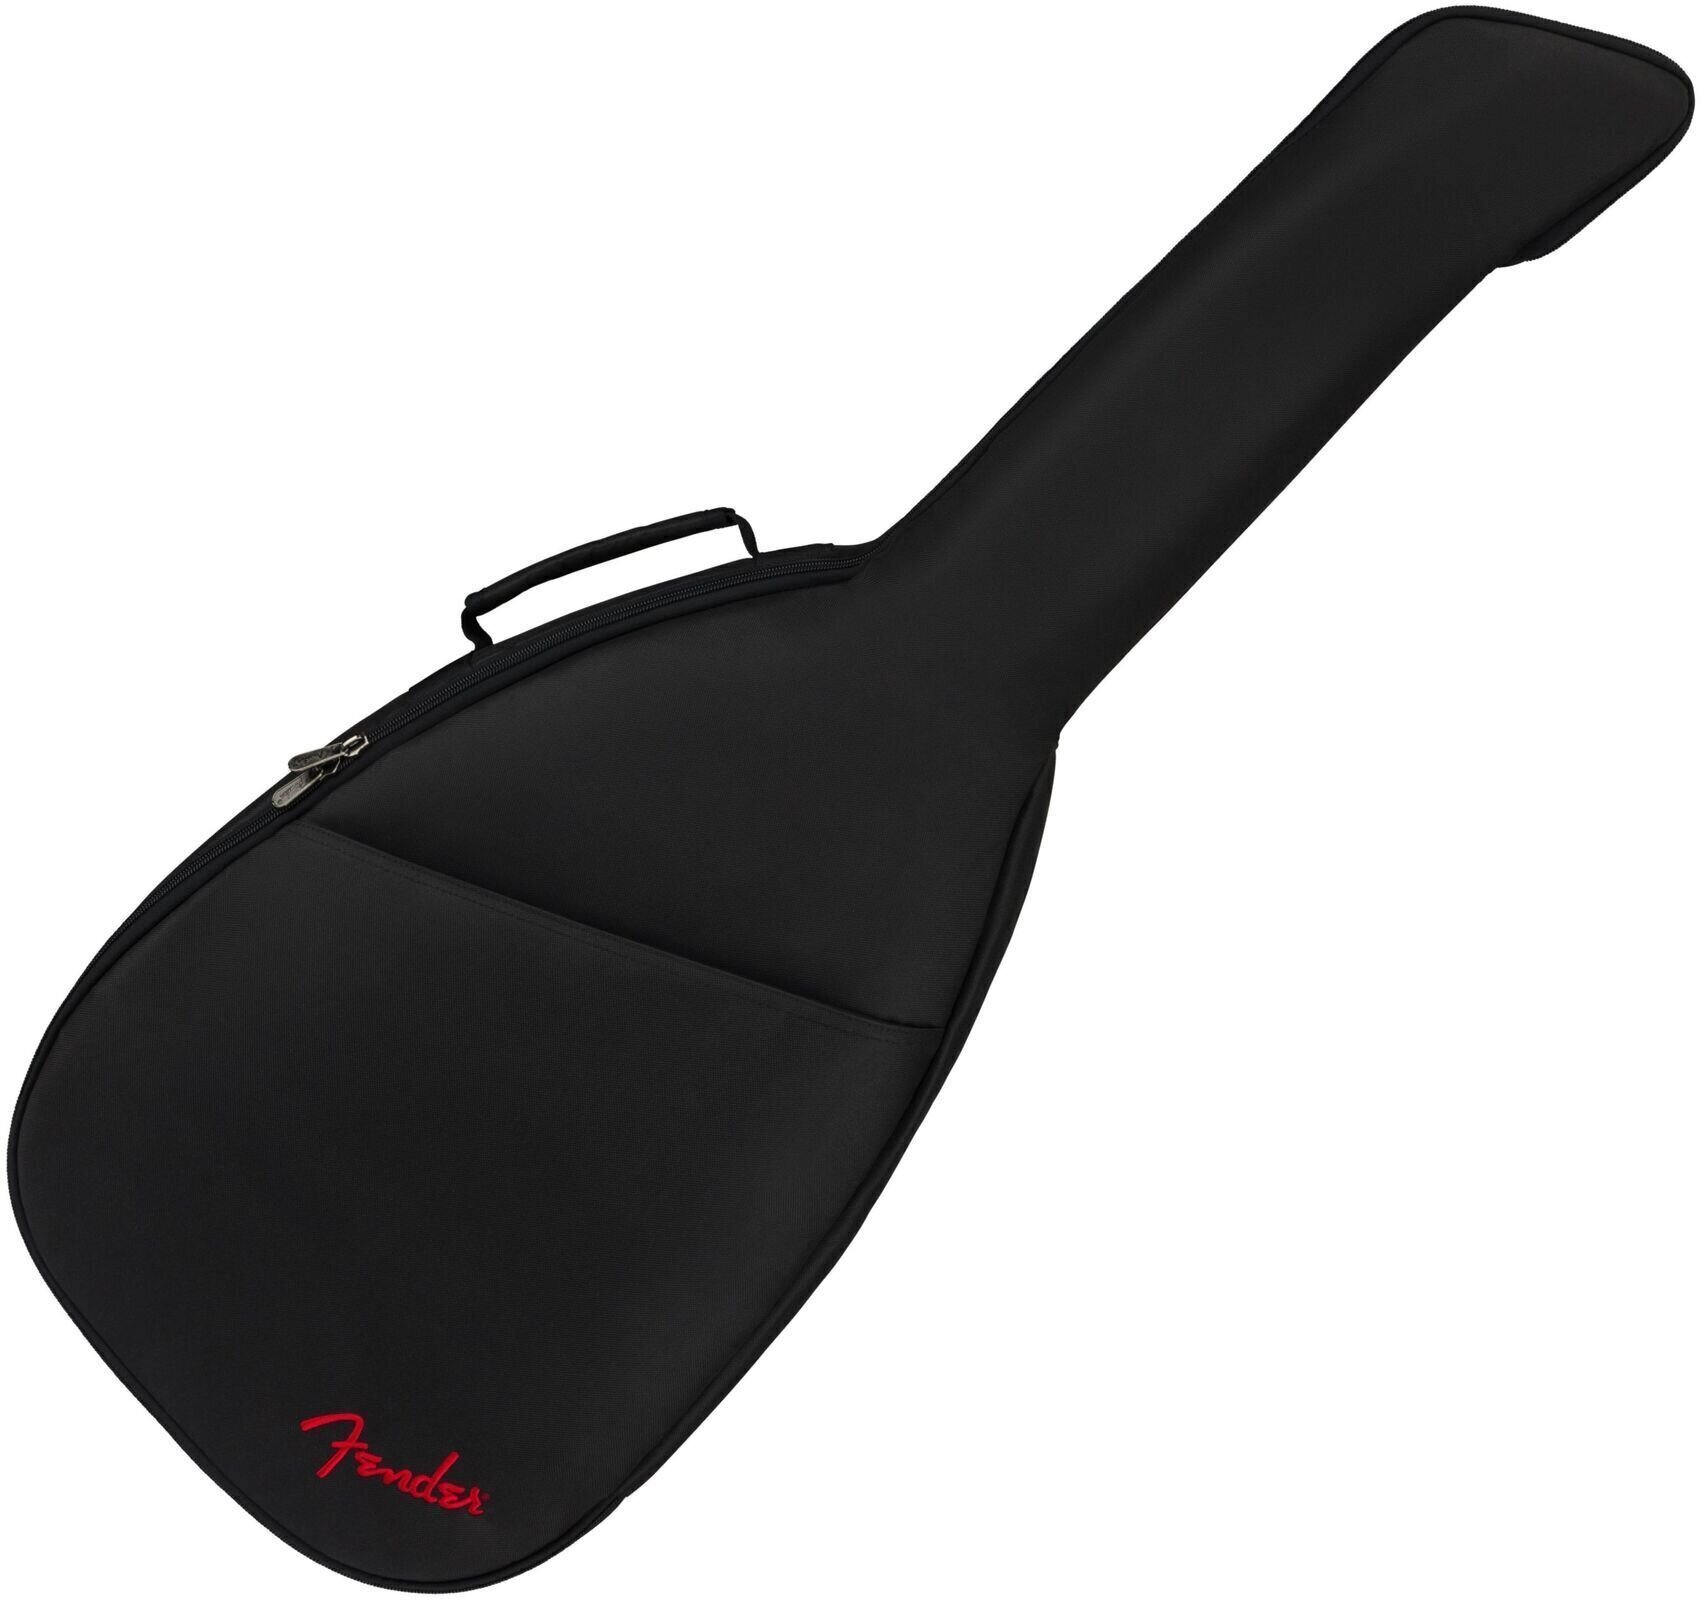 Gigbag for Acoustic Guitar Fender FAS405 Gigbag for Acoustic Guitar Black